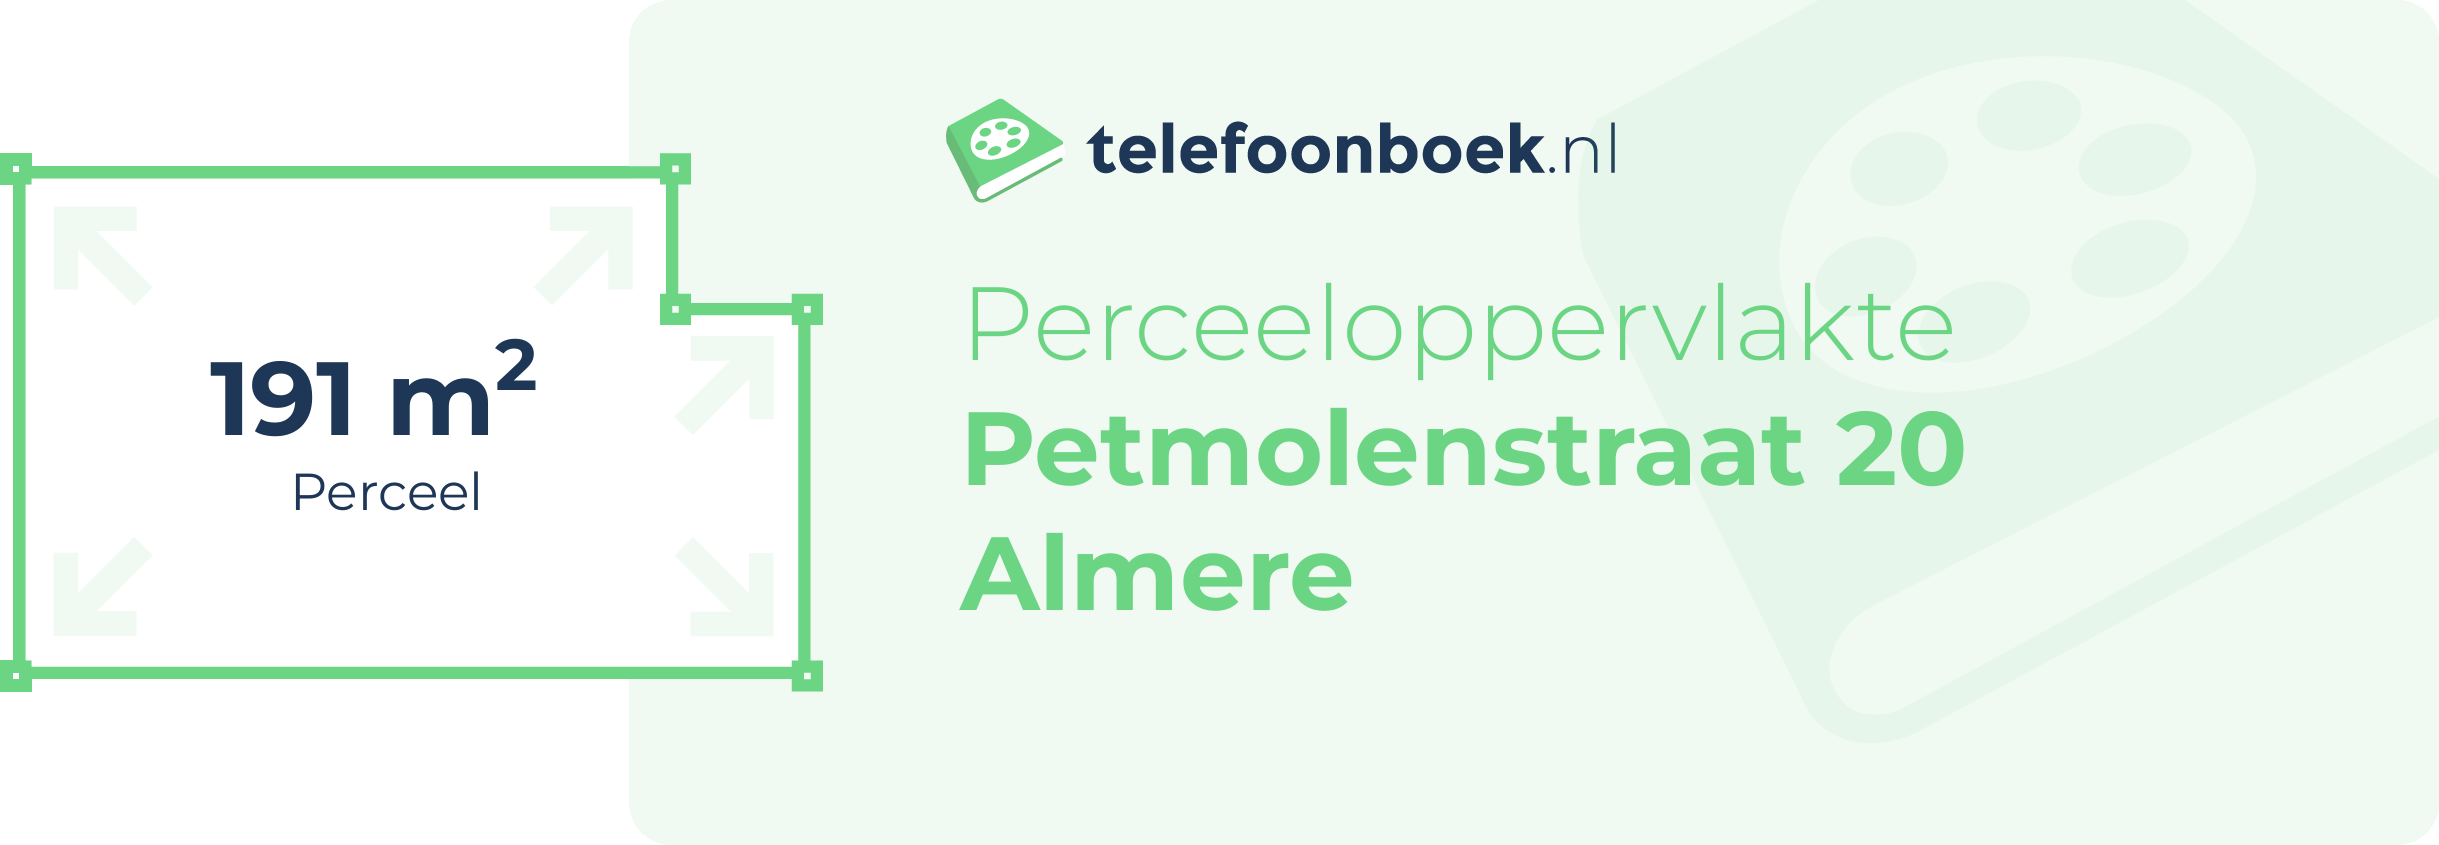 Perceeloppervlakte Petmolenstraat 20 Almere